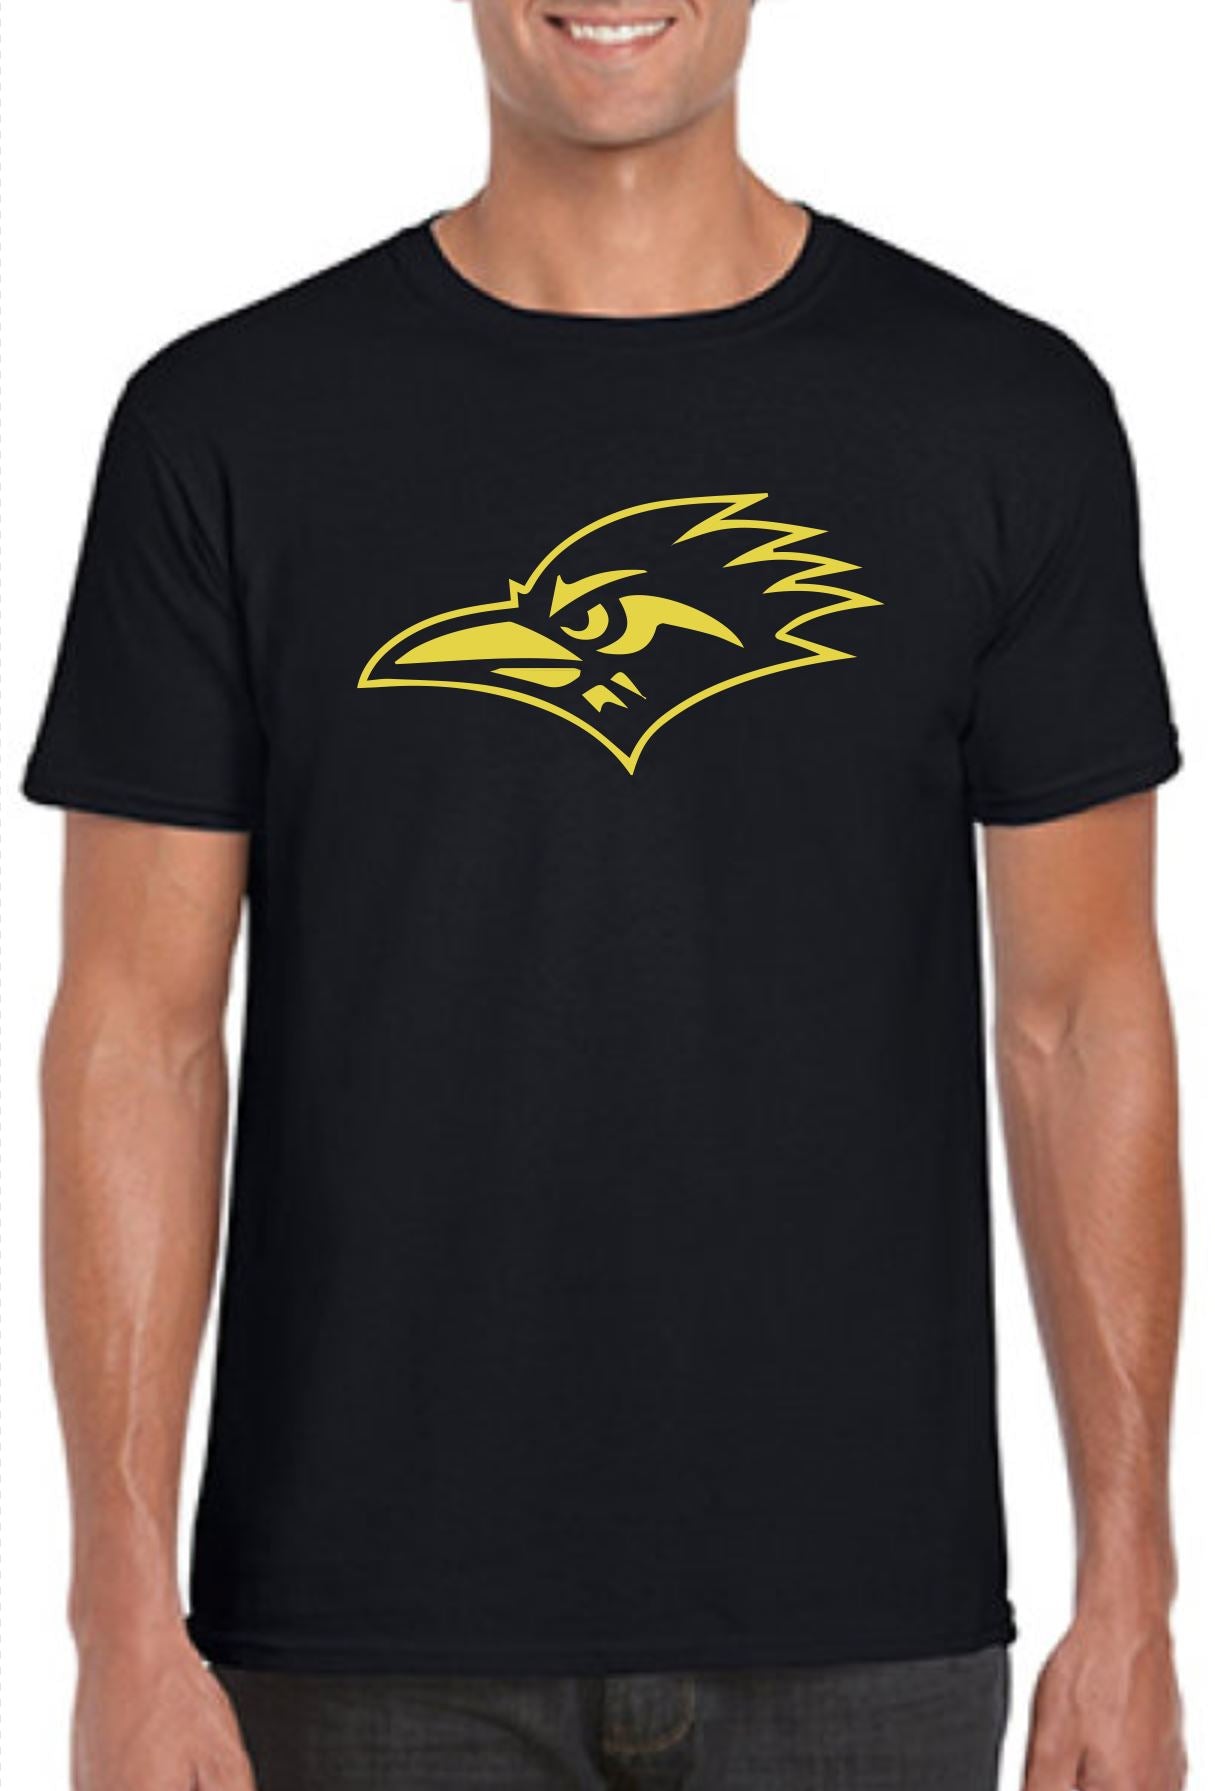 STCS Gold bird logo Gildan DryBlend Adult T-Shirts